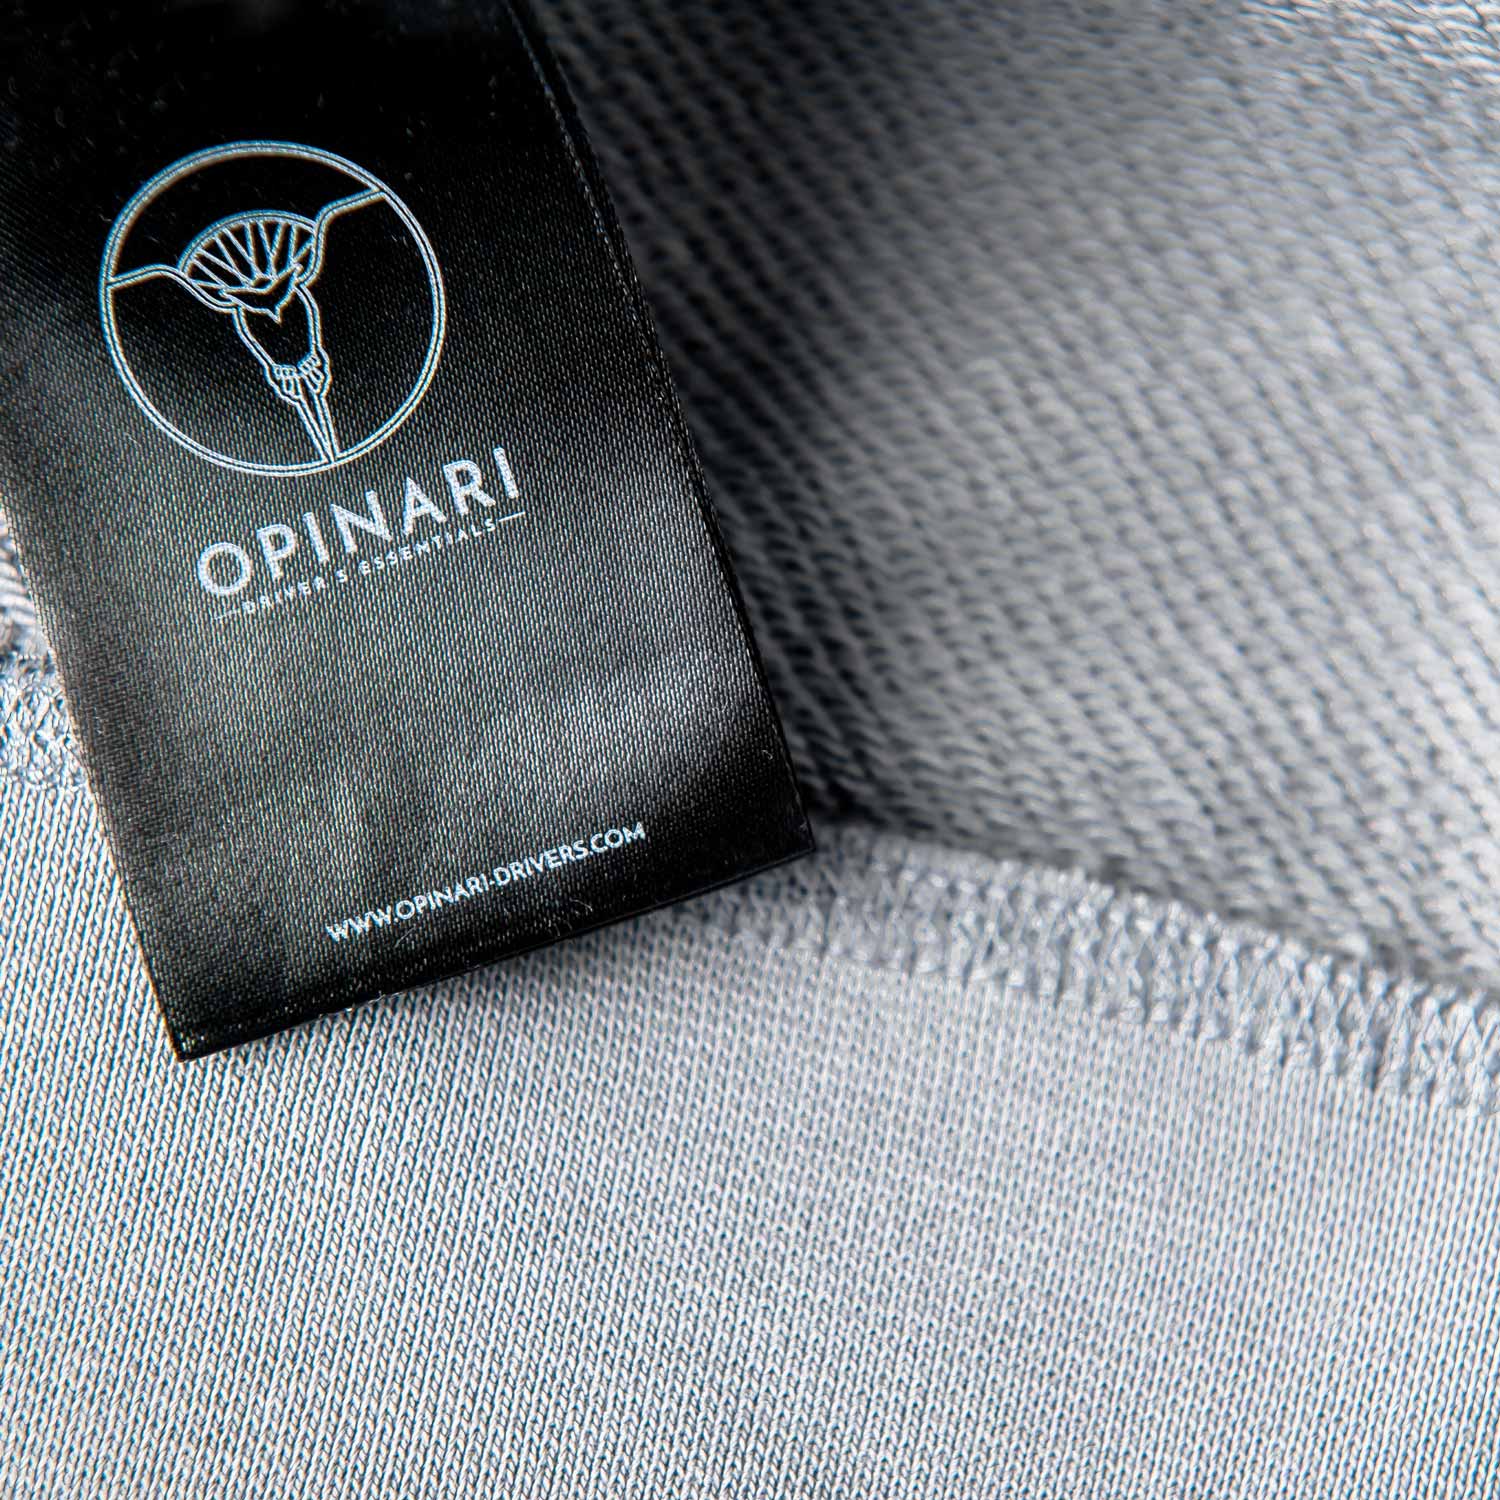 Classic sweat blue on grey - Opinari - Driver's Essentials